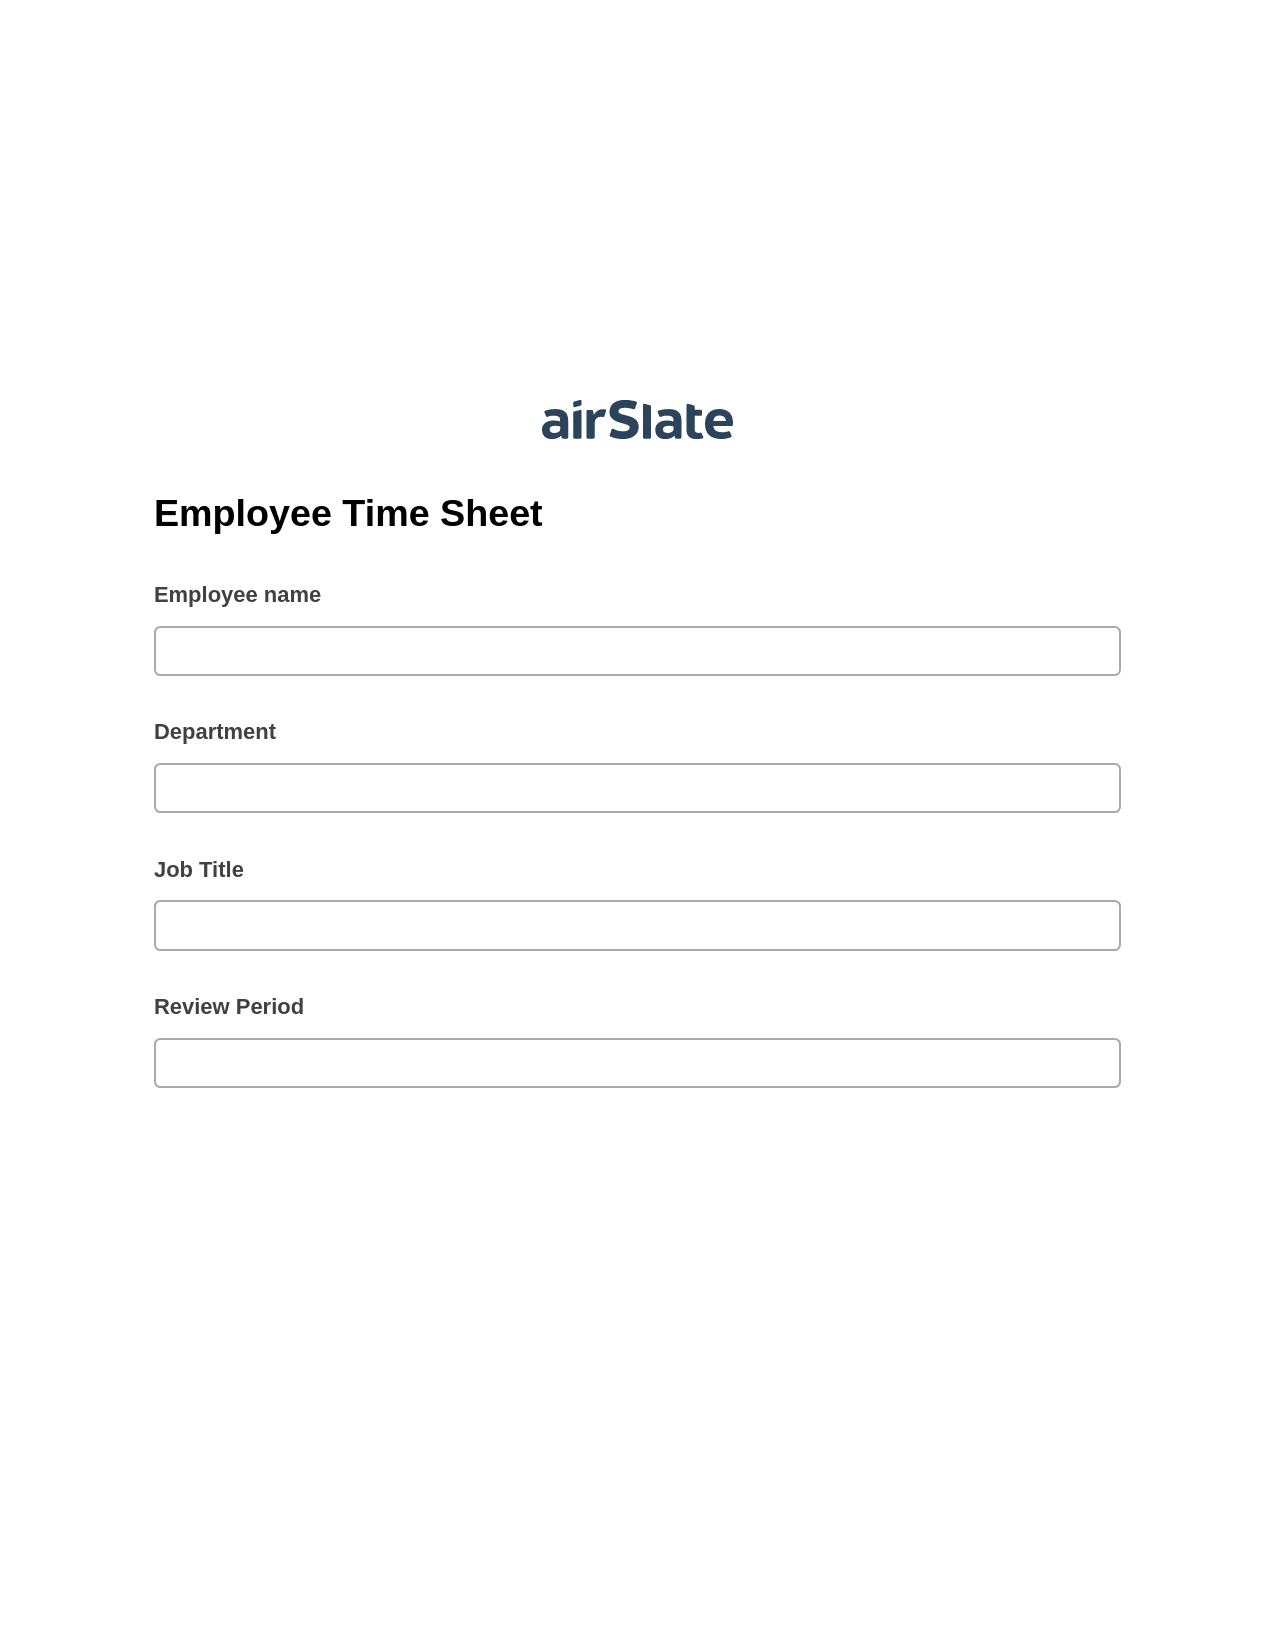 Employee Time Sheet Pre-fill from Salesforce Records Bot, Google Sheet Two-Way Binding Bot, Email Notification Postfinish Bot